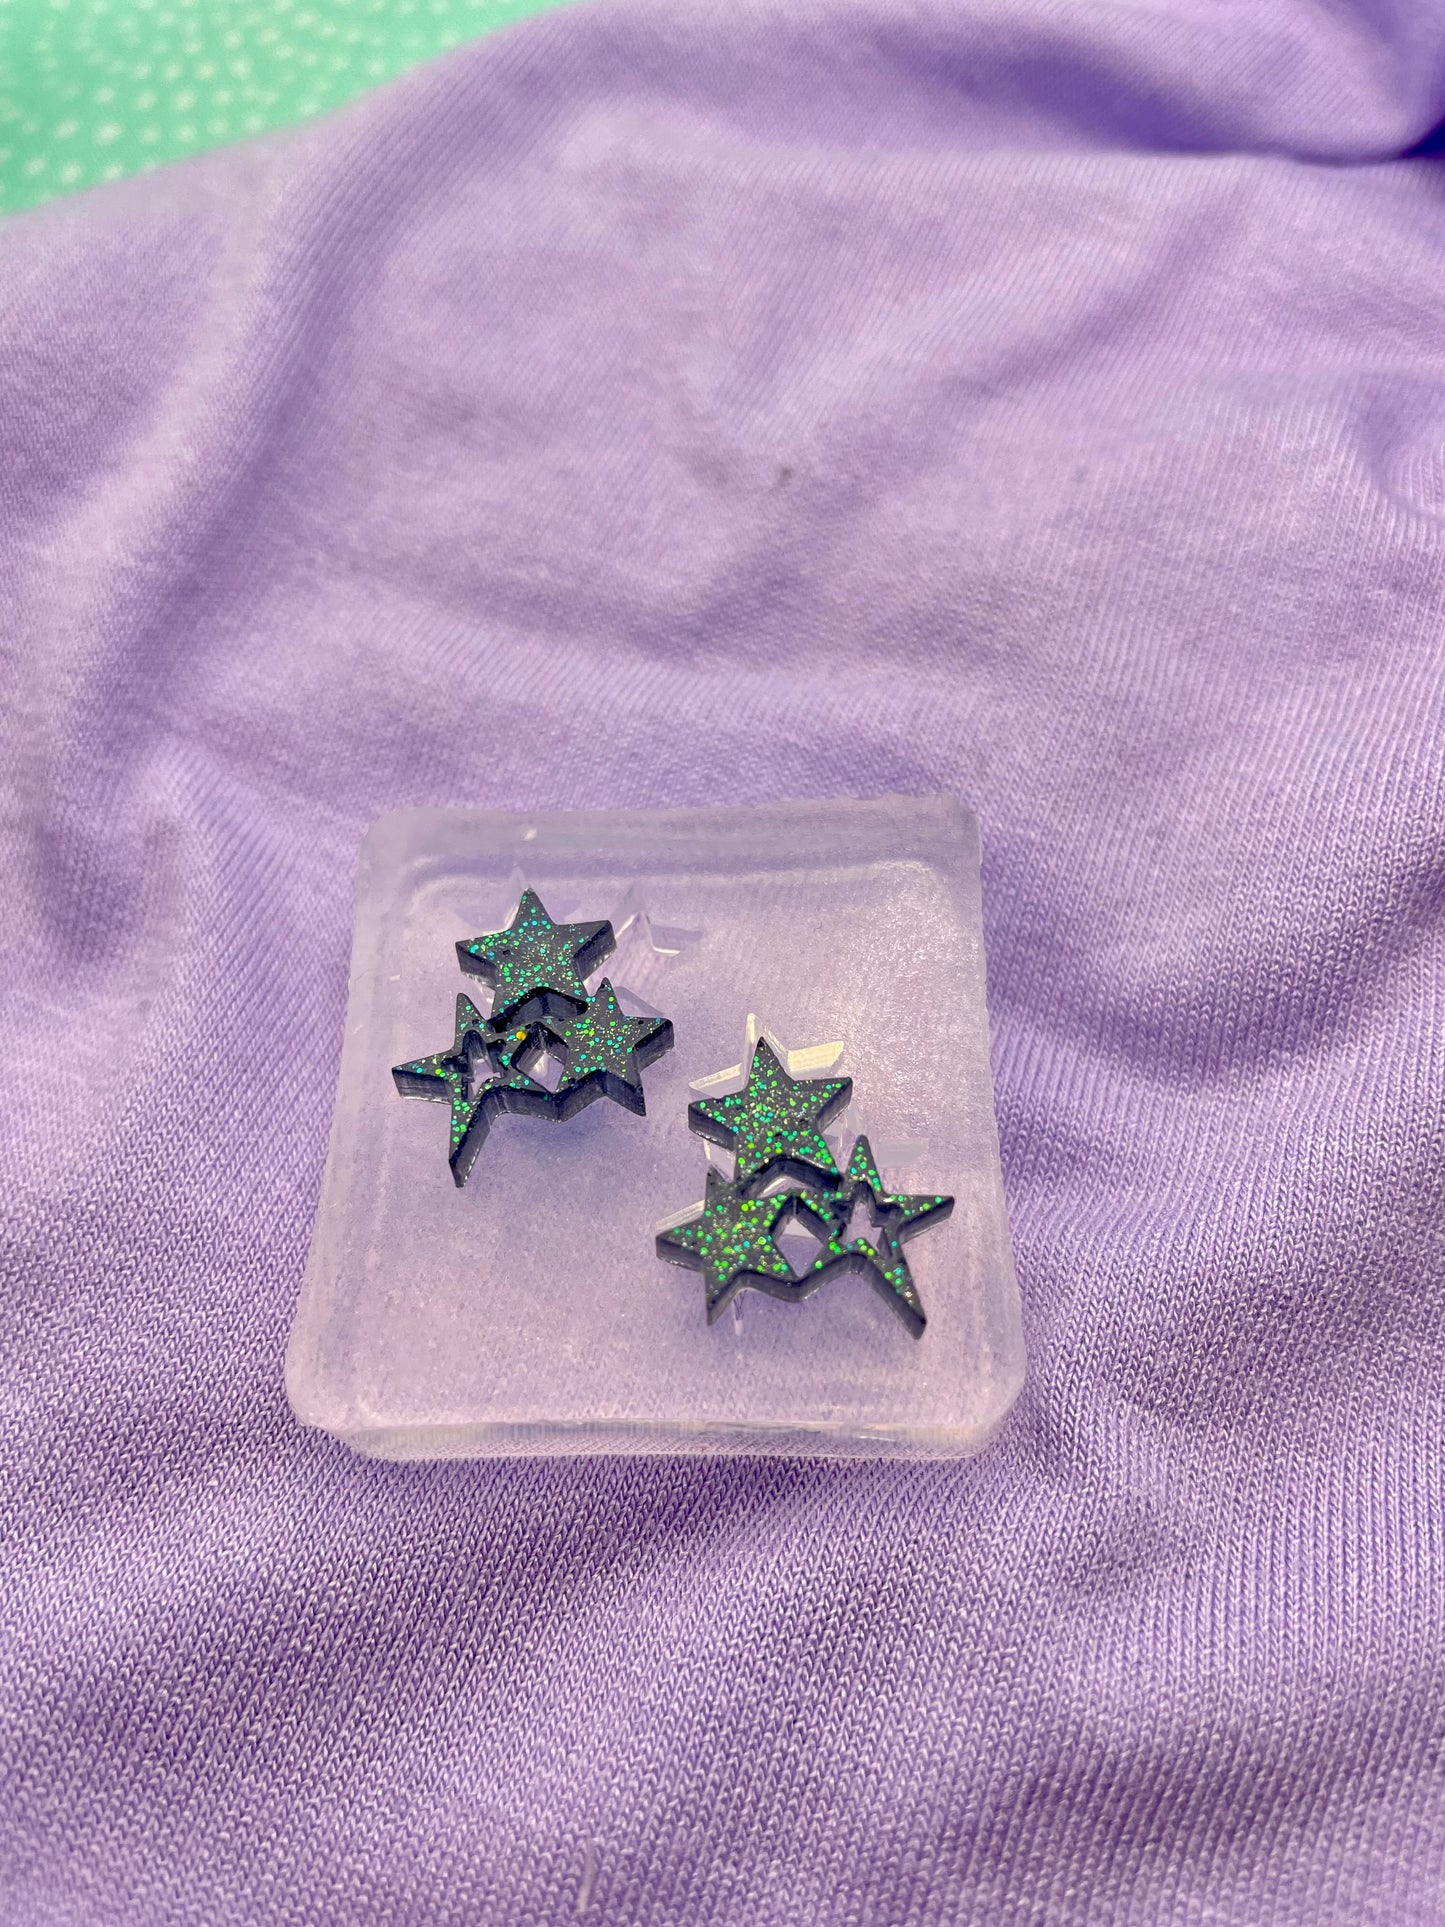 Triple Star Cluster Stud Earring Mold